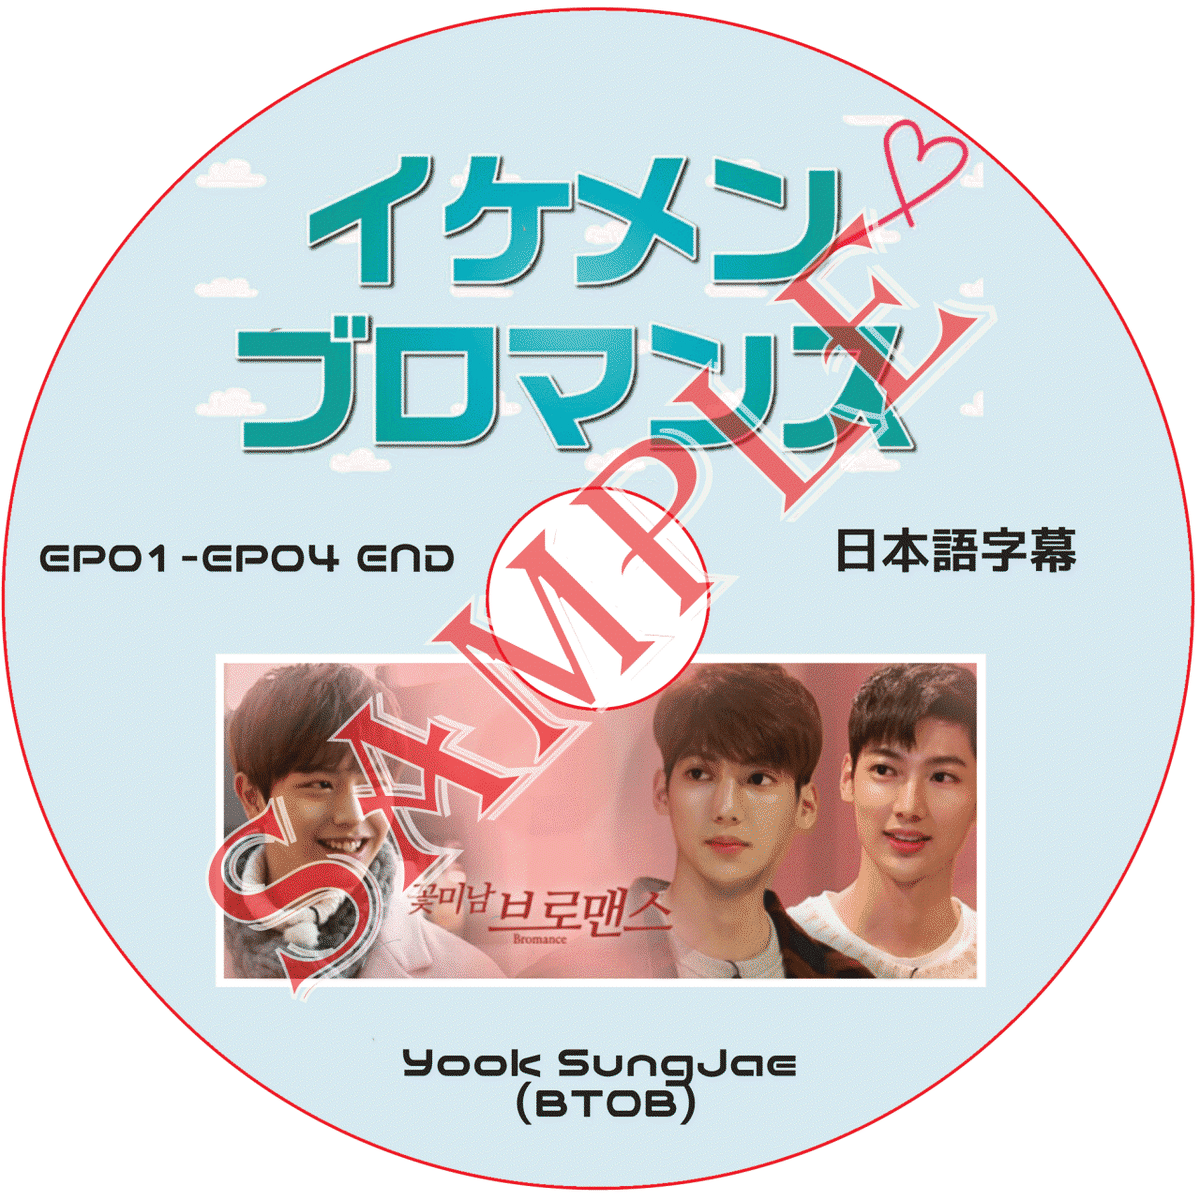 K Pop Dvd Btob イケメンブロマンス Ep01 Ep04 End 日本語字幕 ビトゥビ Kpop Style